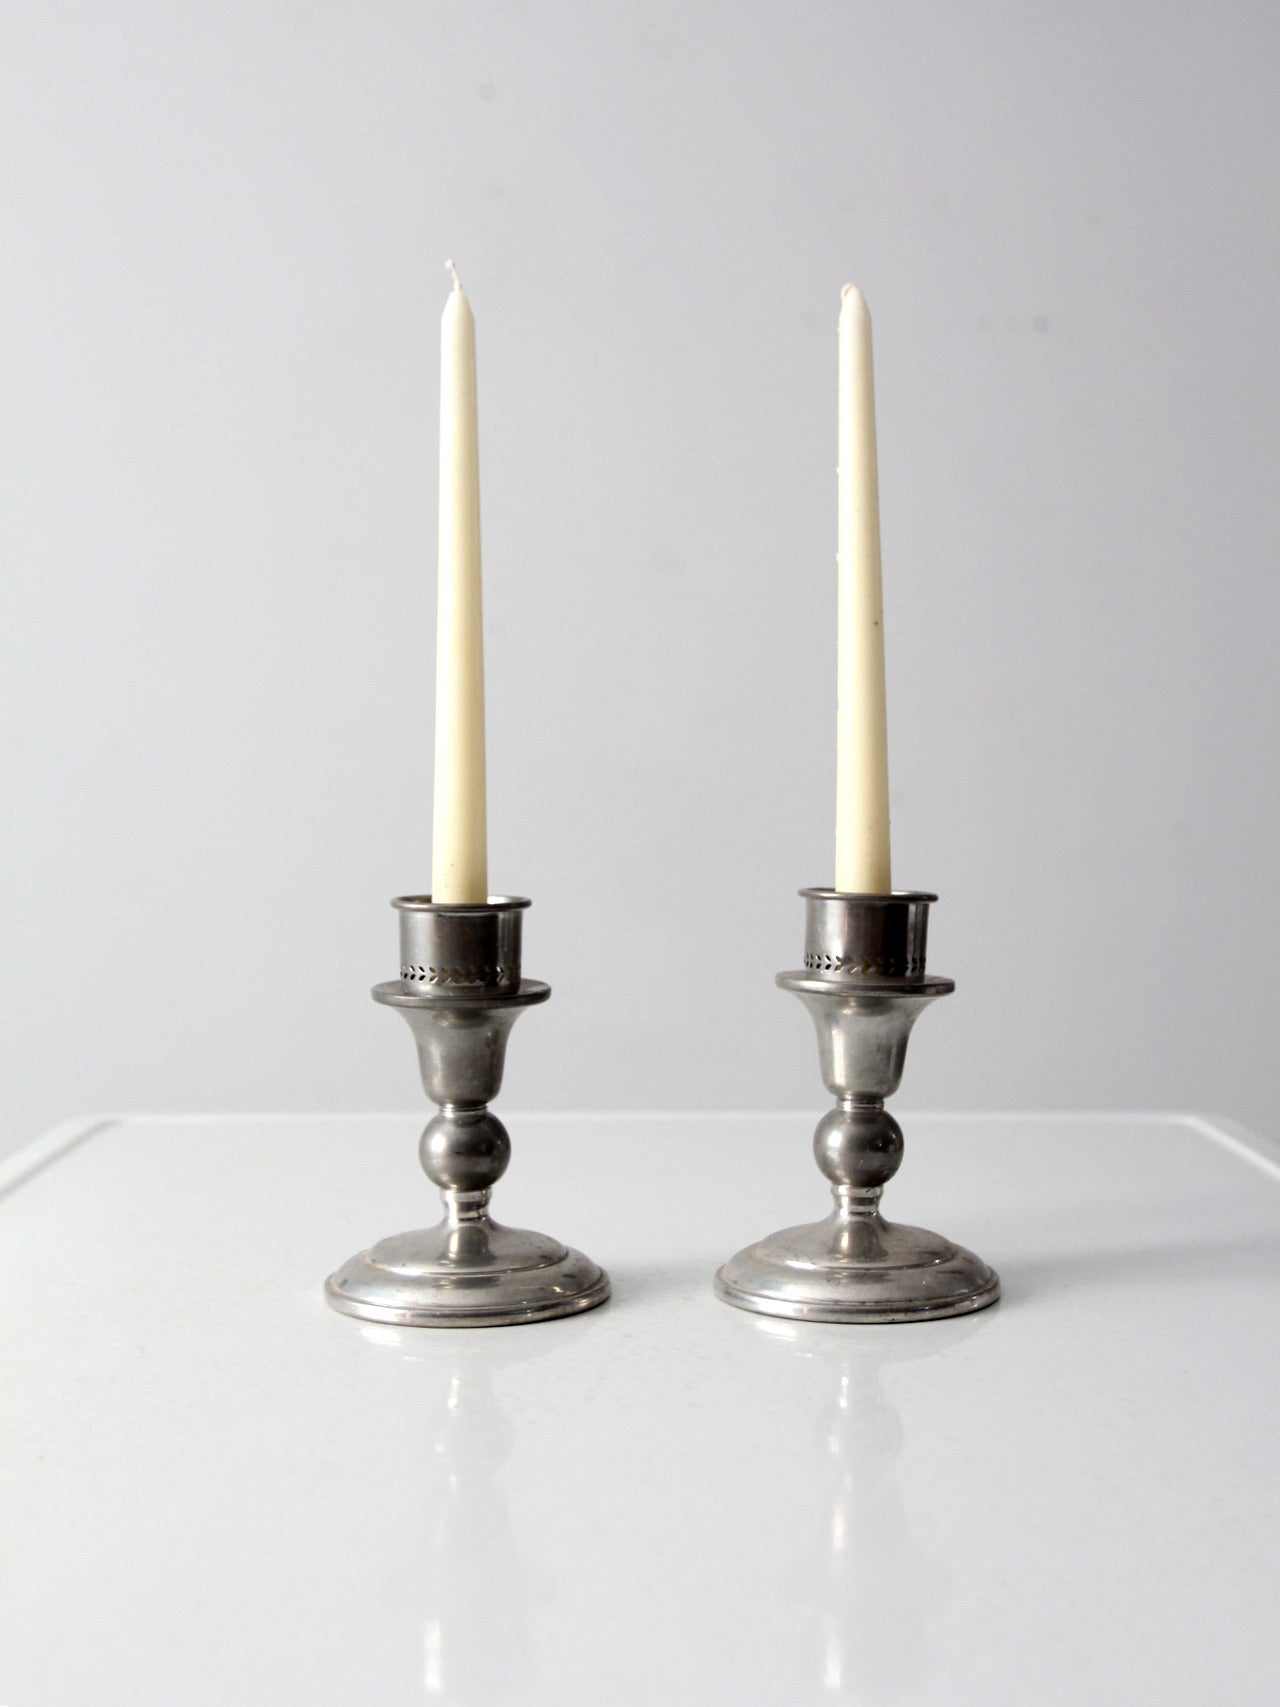 vintage Revere pewter candlestick holder pair